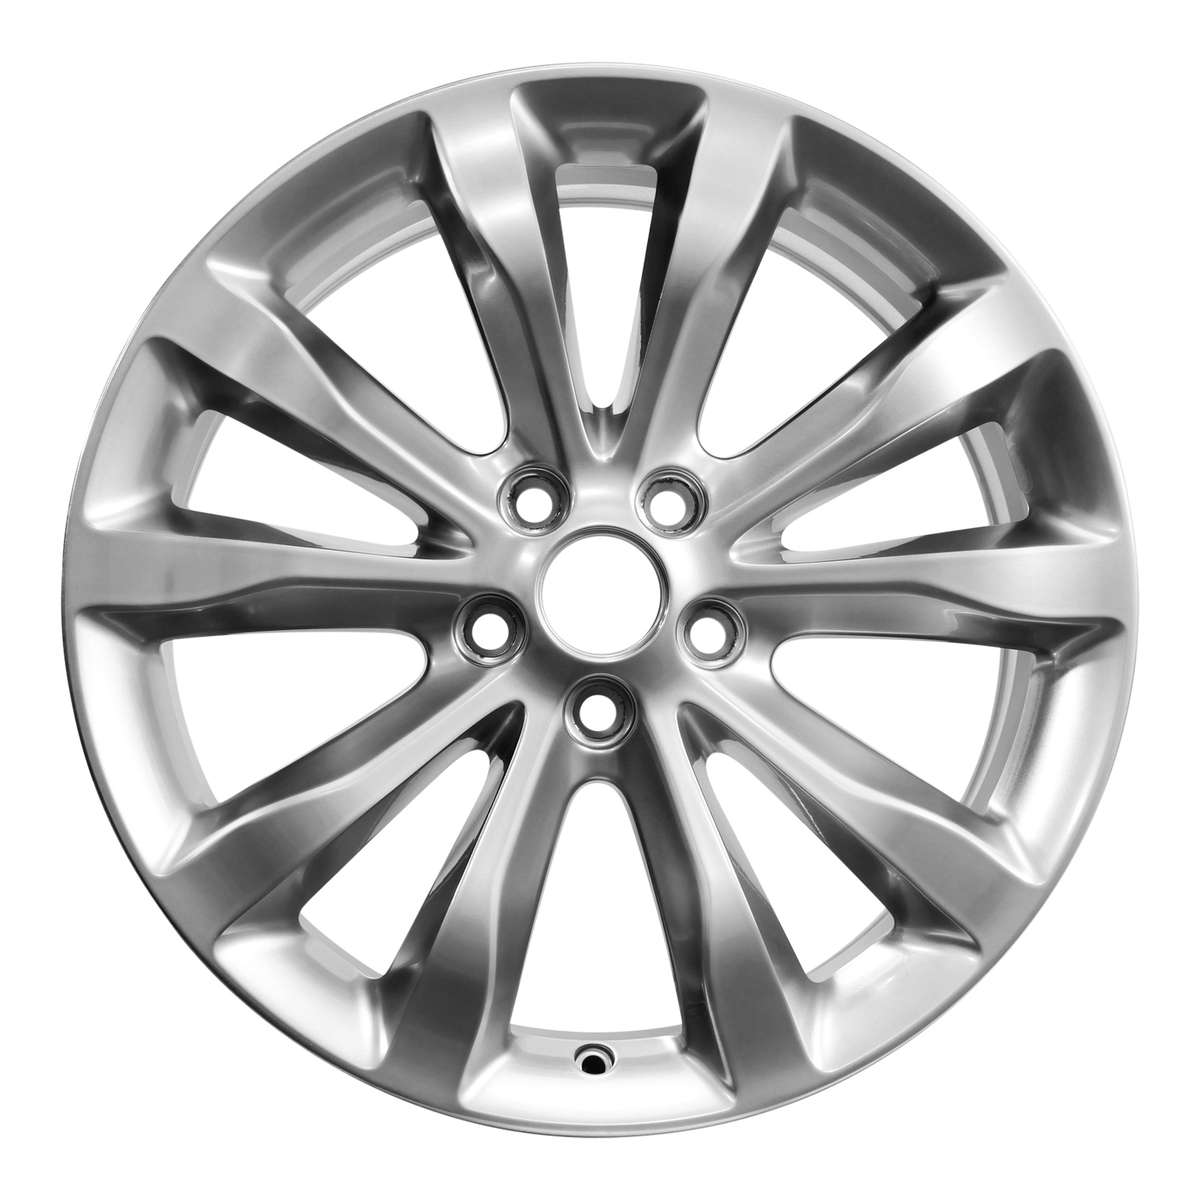 2020 Chrysler 300 19" OEM Wheel Rim W2538H